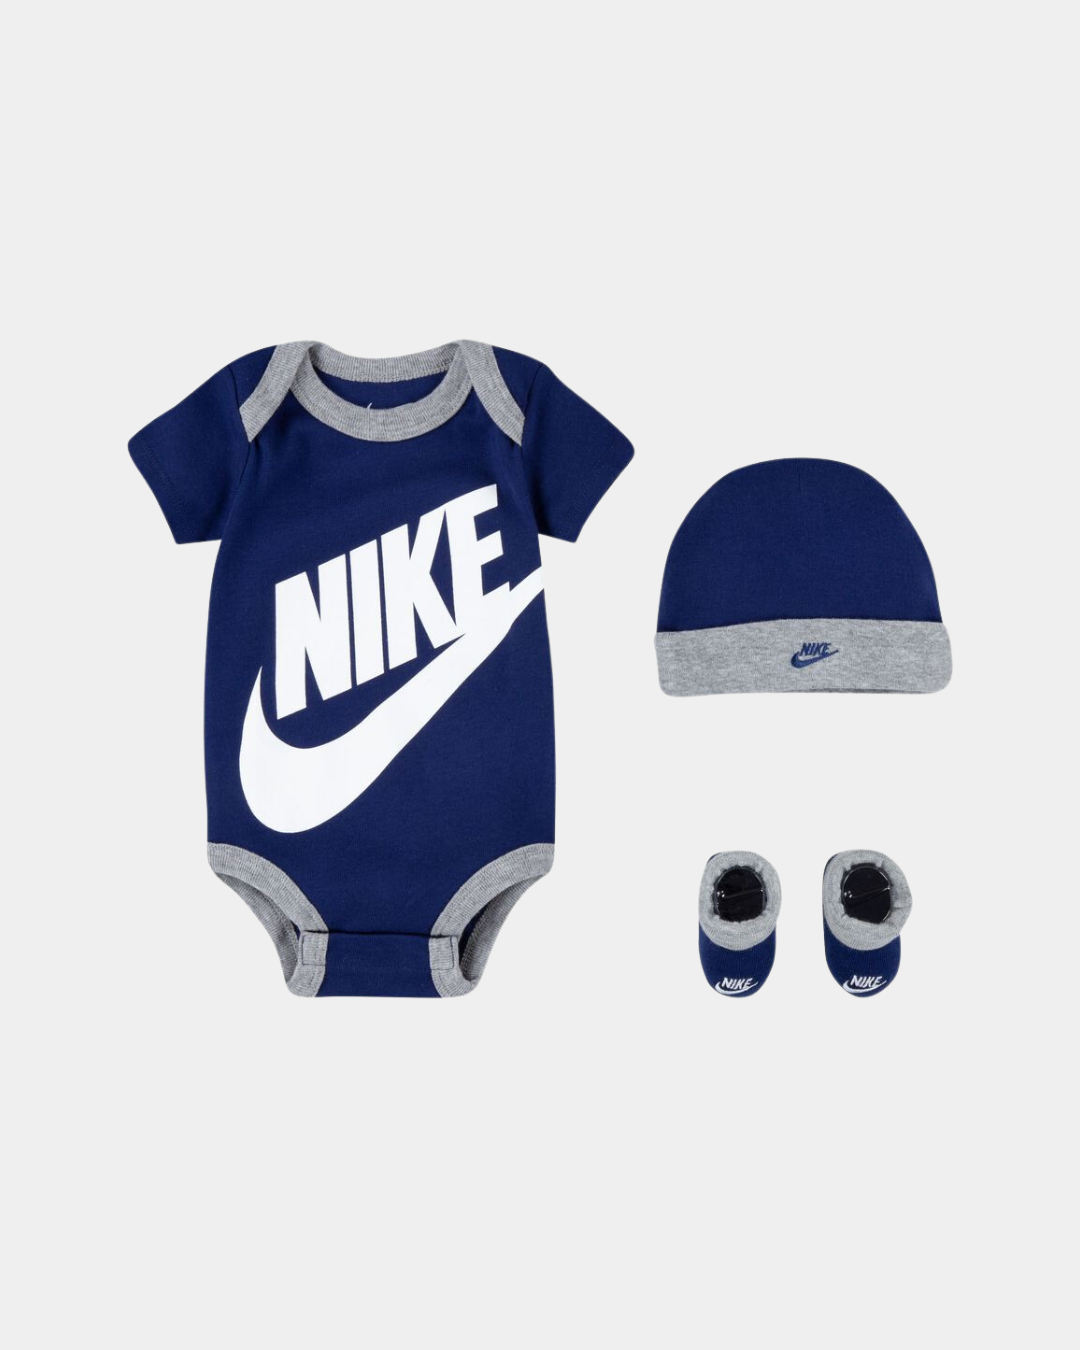 Nike Baby Set - Blue/Grey/White